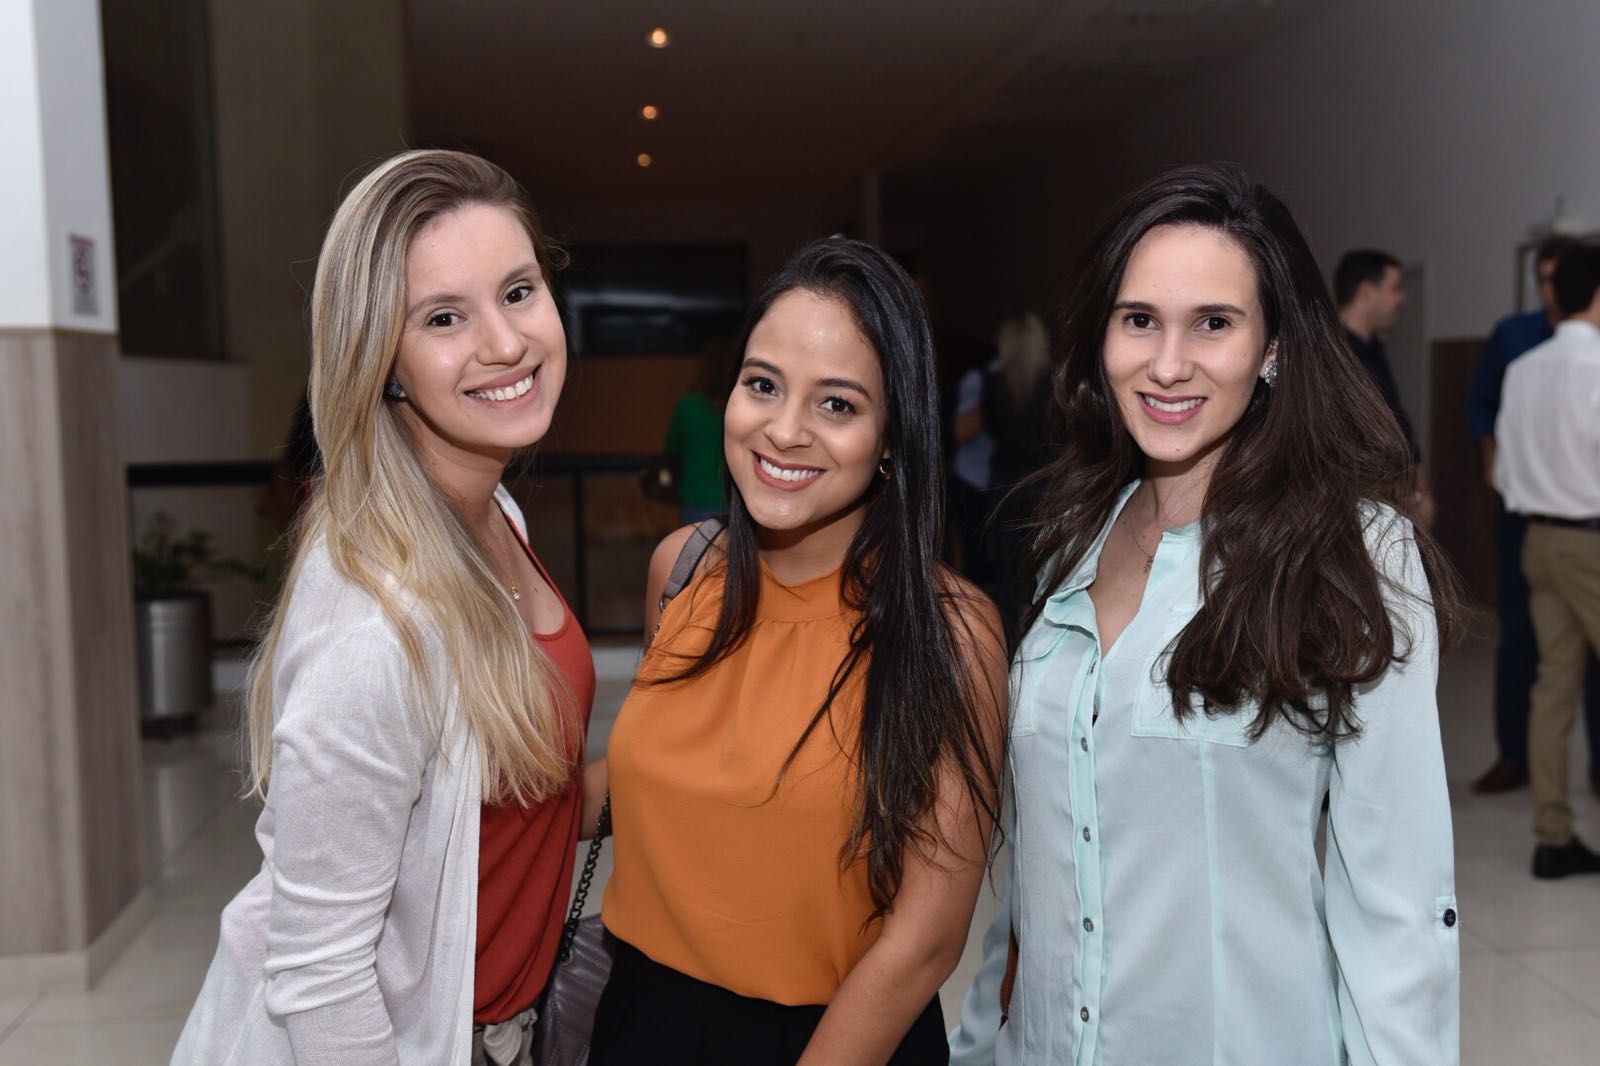  Camila Torquato, Catherine Miranda e Adriana Sales              